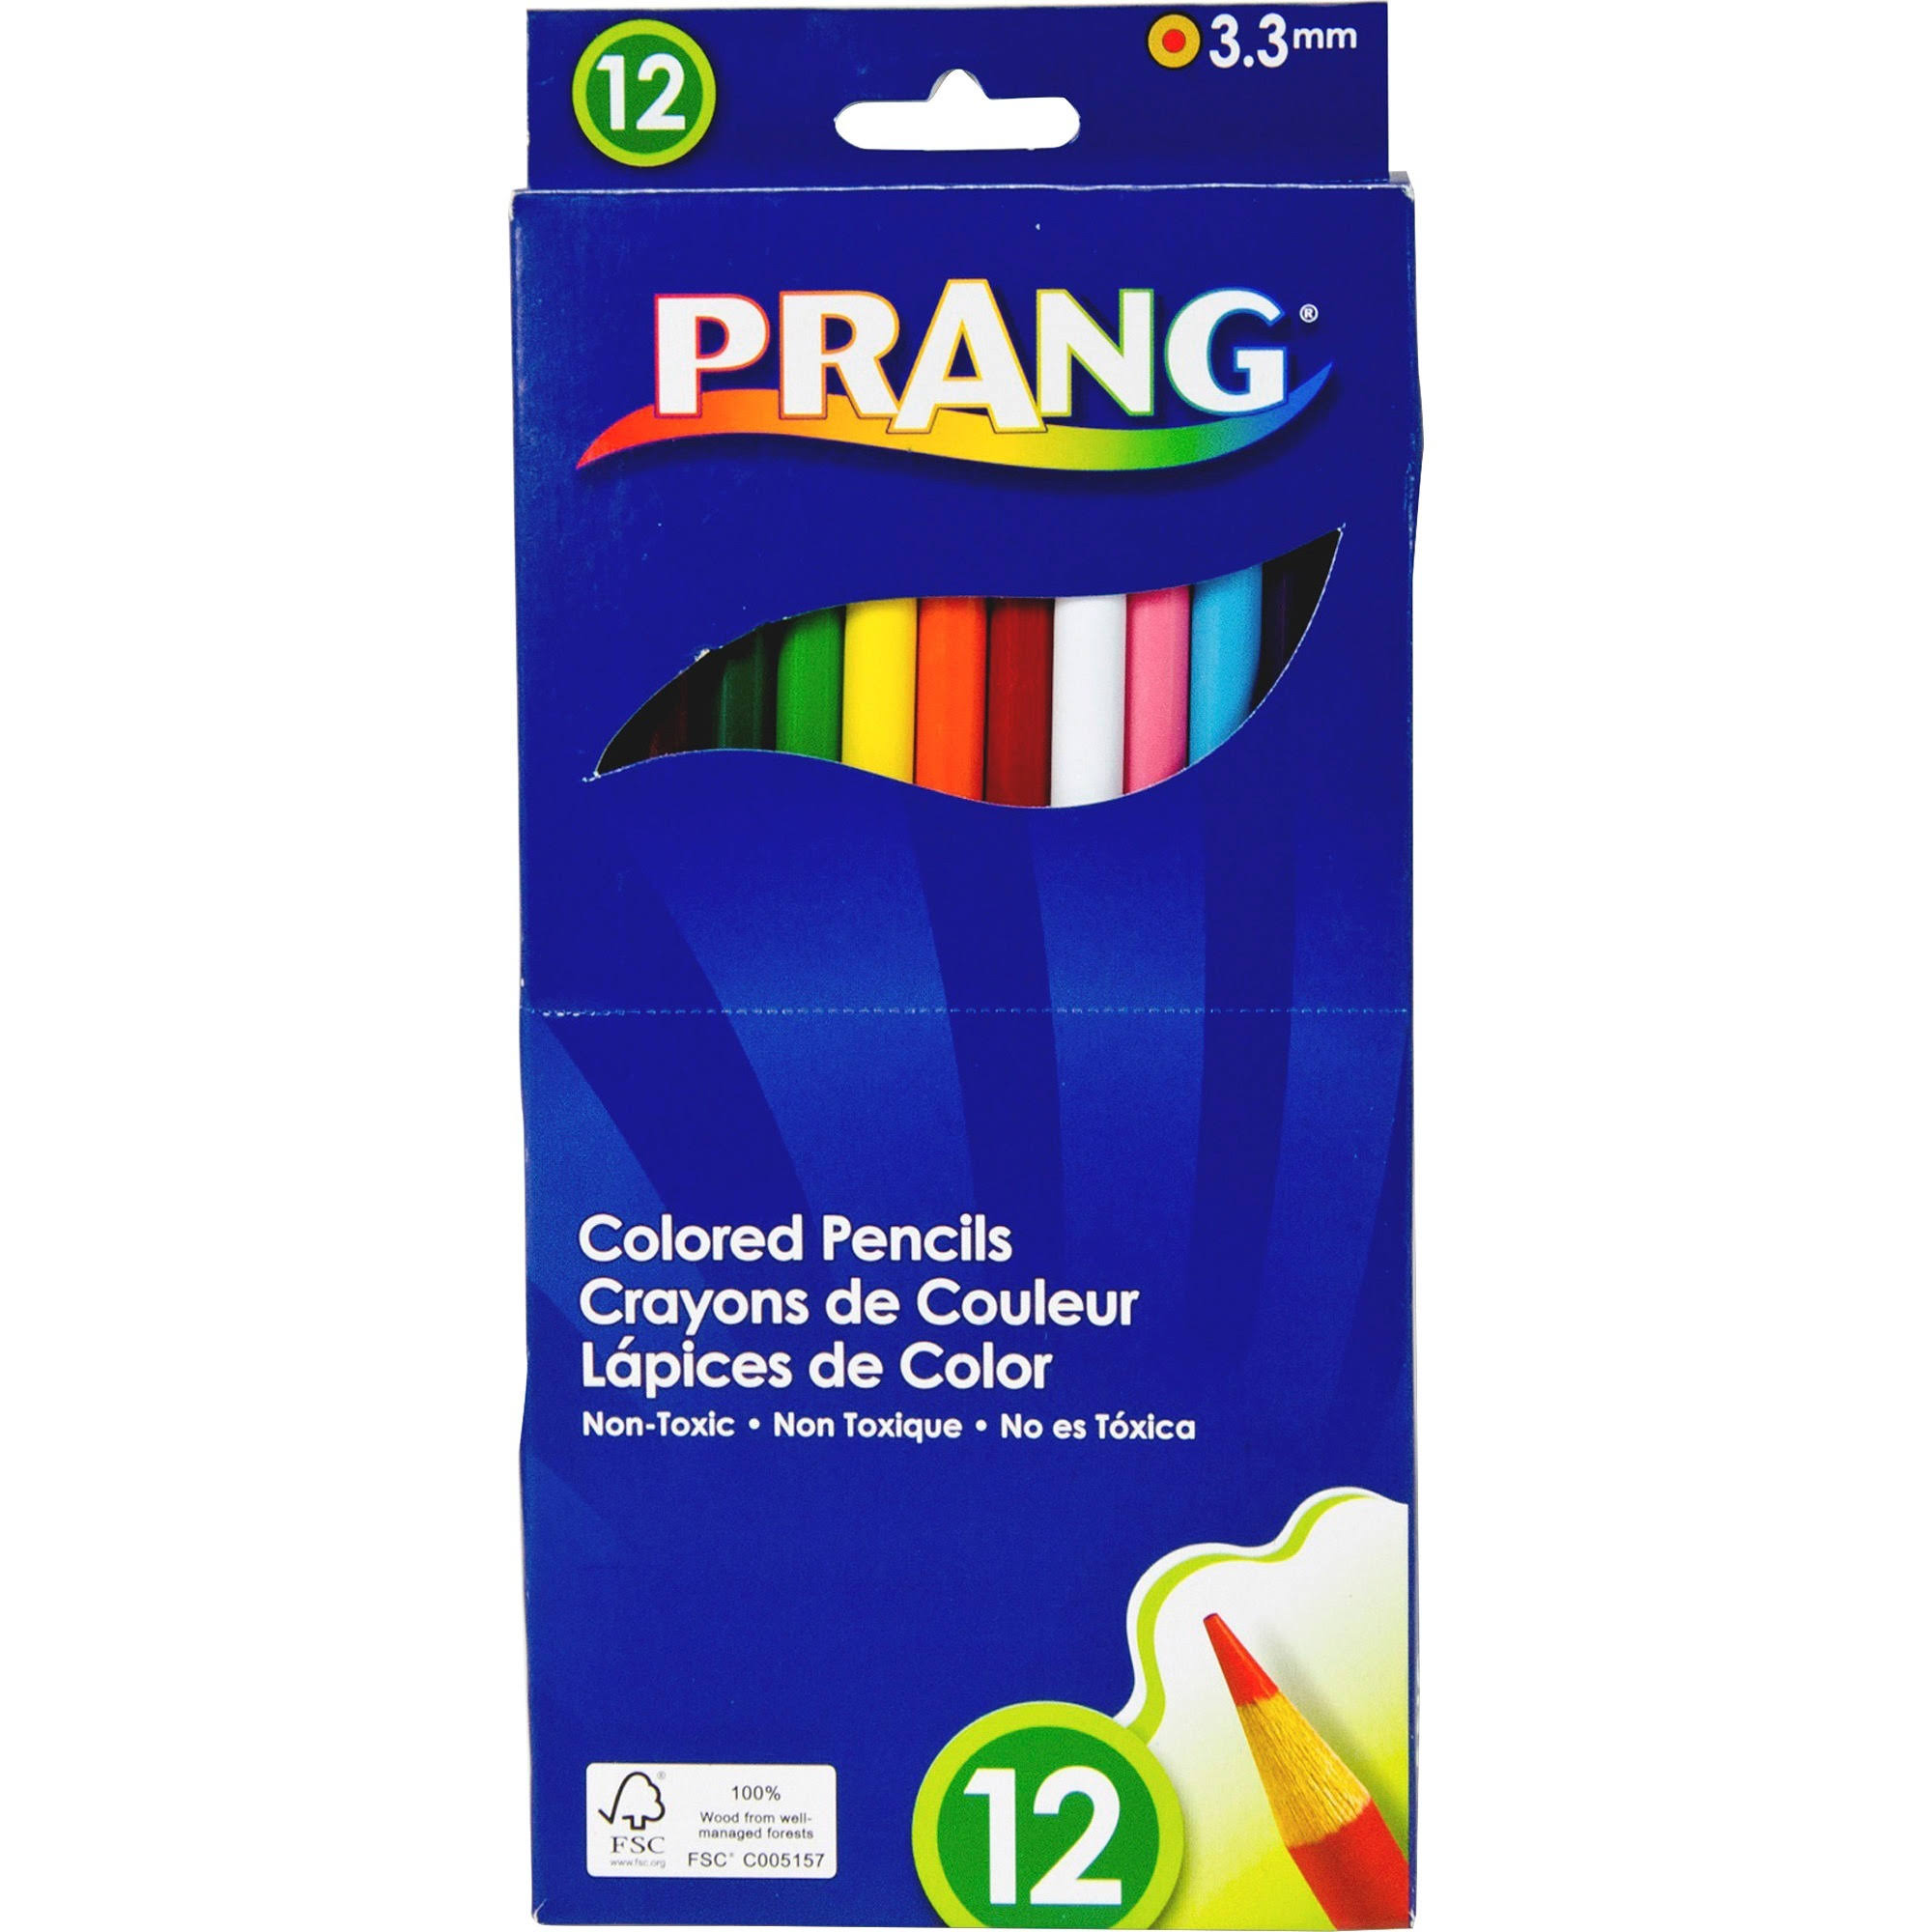 Prang 12 Colored Pencils